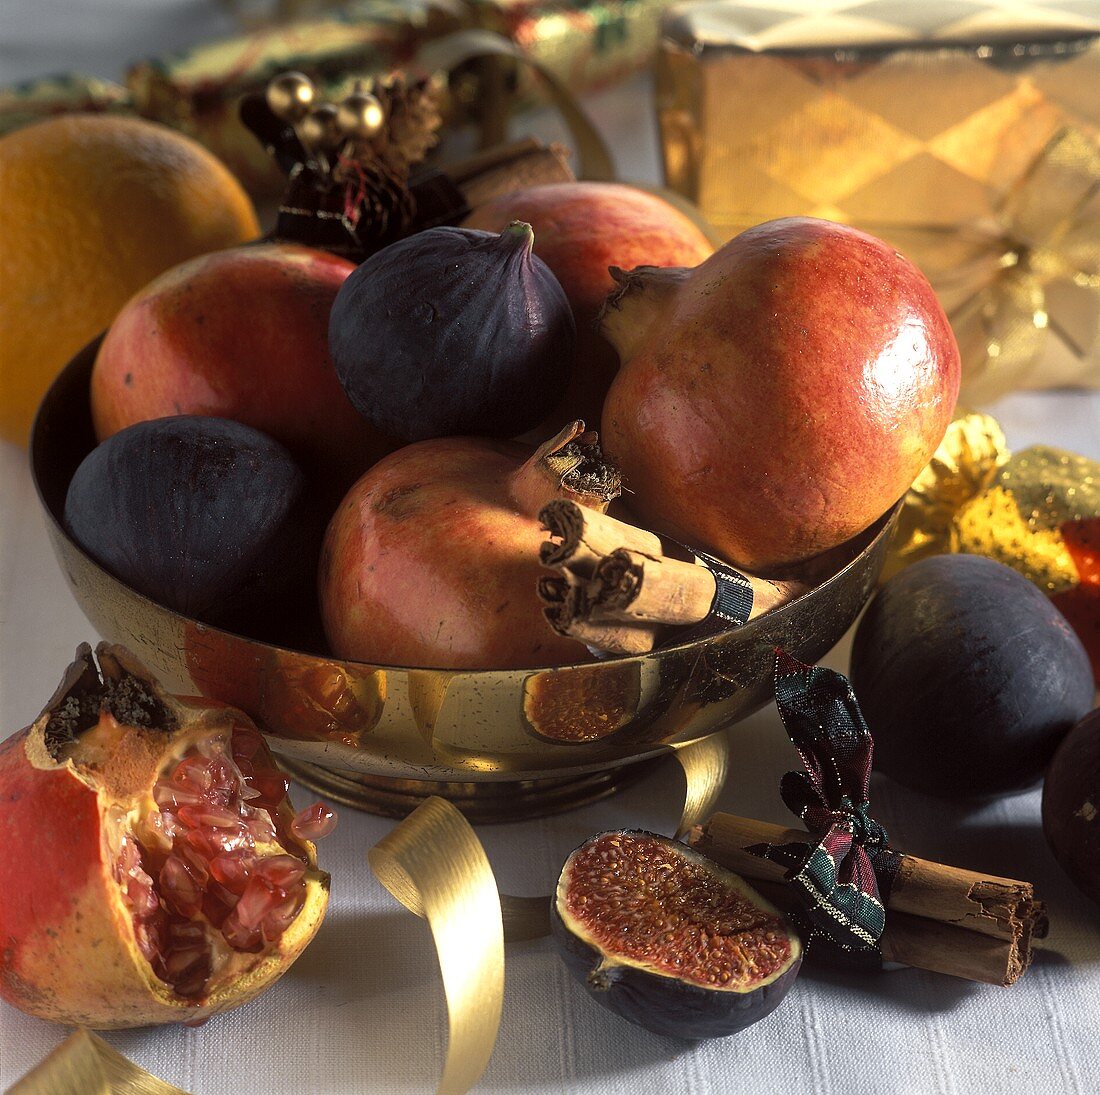 Fresh fruit in a golden bowl; Christmas décor